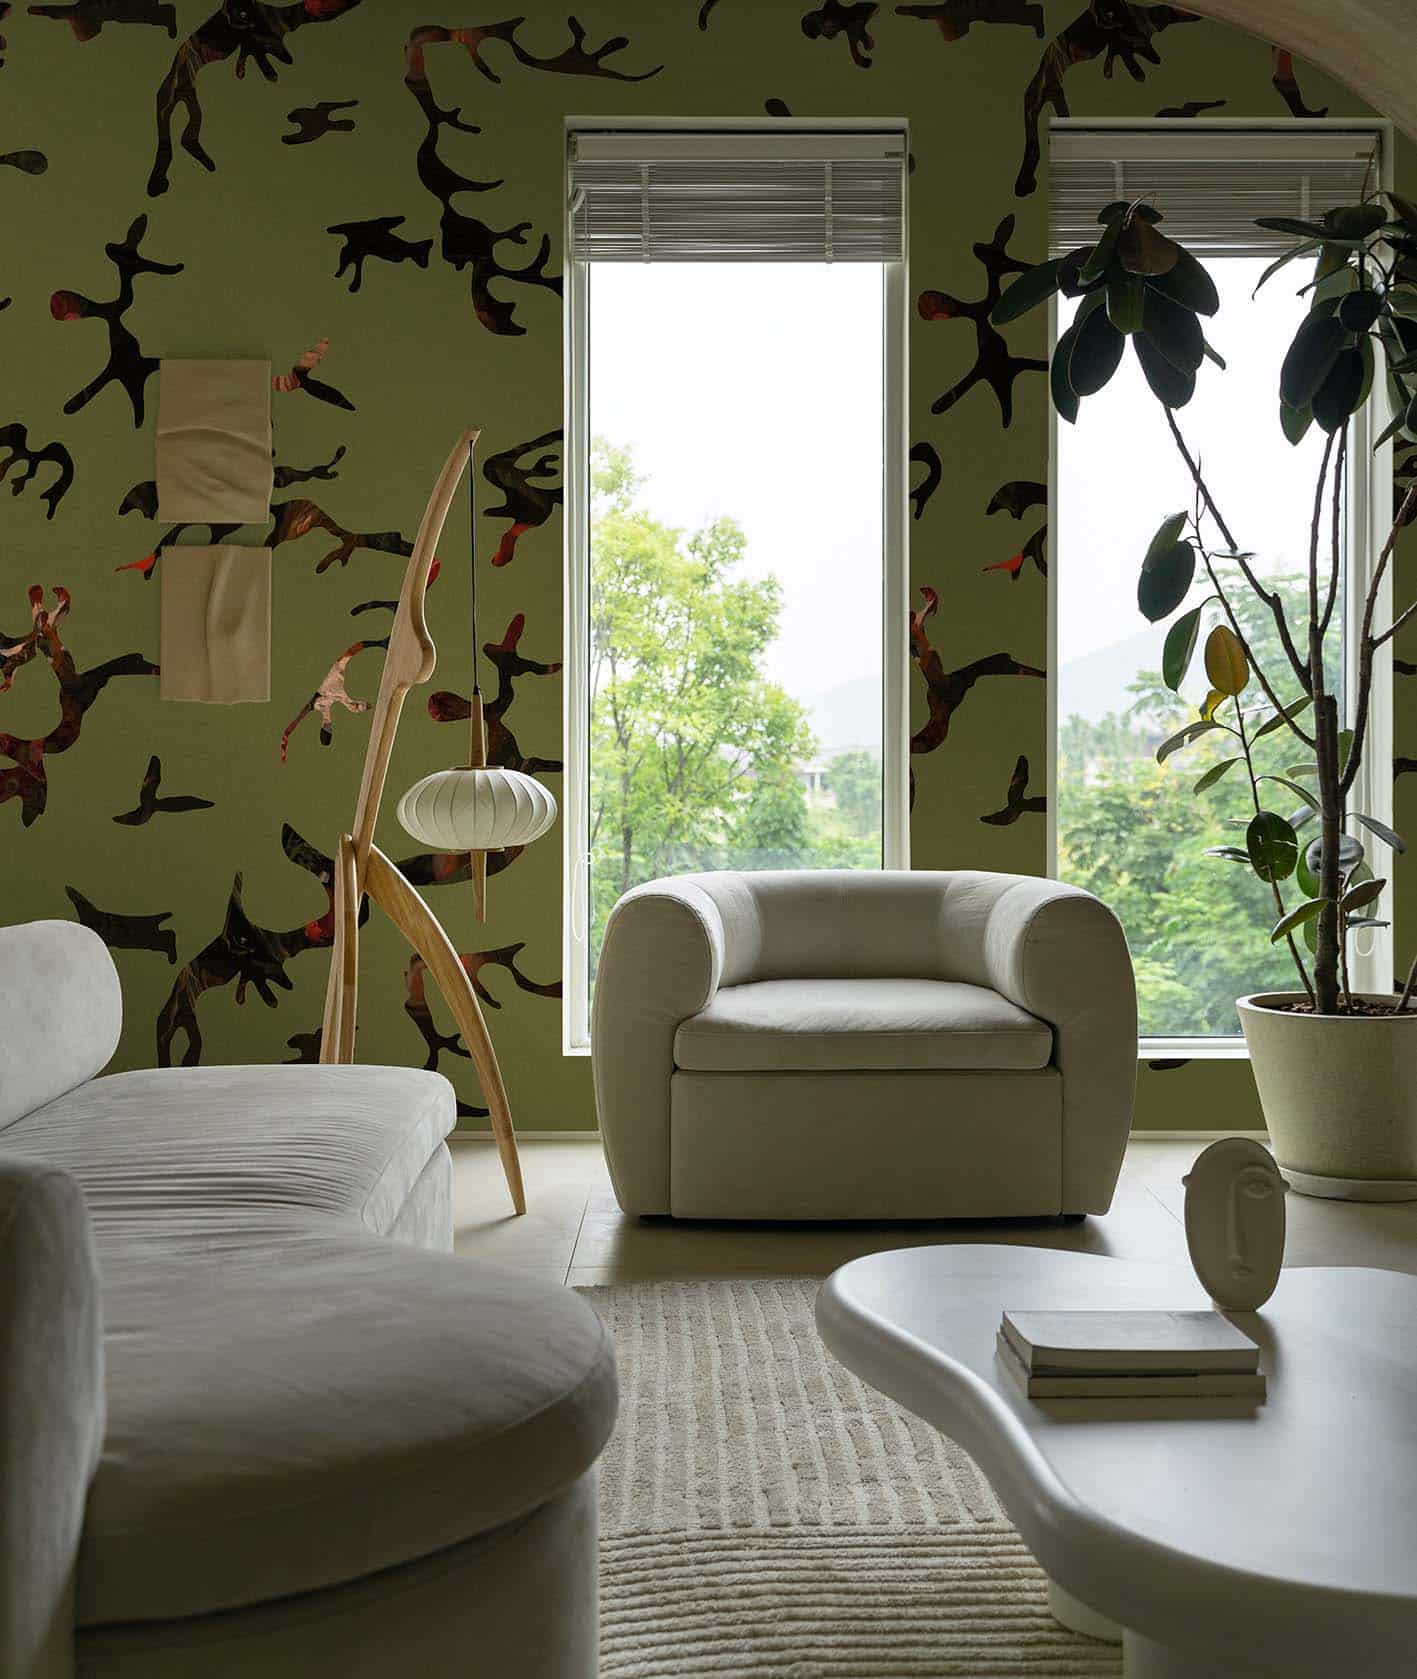 Find-me-in-the-Dark-Verde-Militare-MaVoix-Wallpaper-by-Magnus-Gjoen-living-room-styling-Spazio-Miscellanea